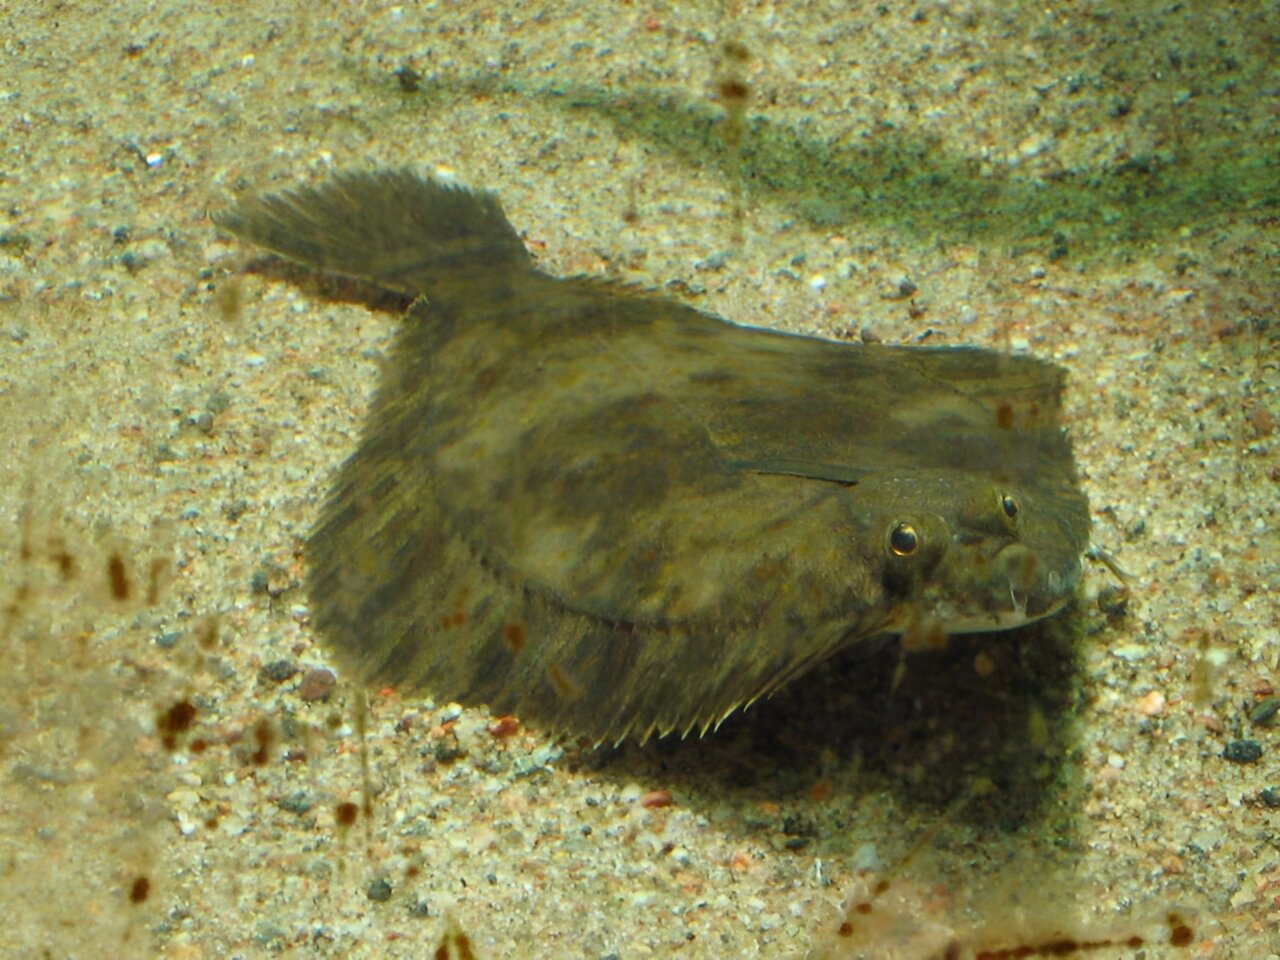 Species focus: Sand Flounder